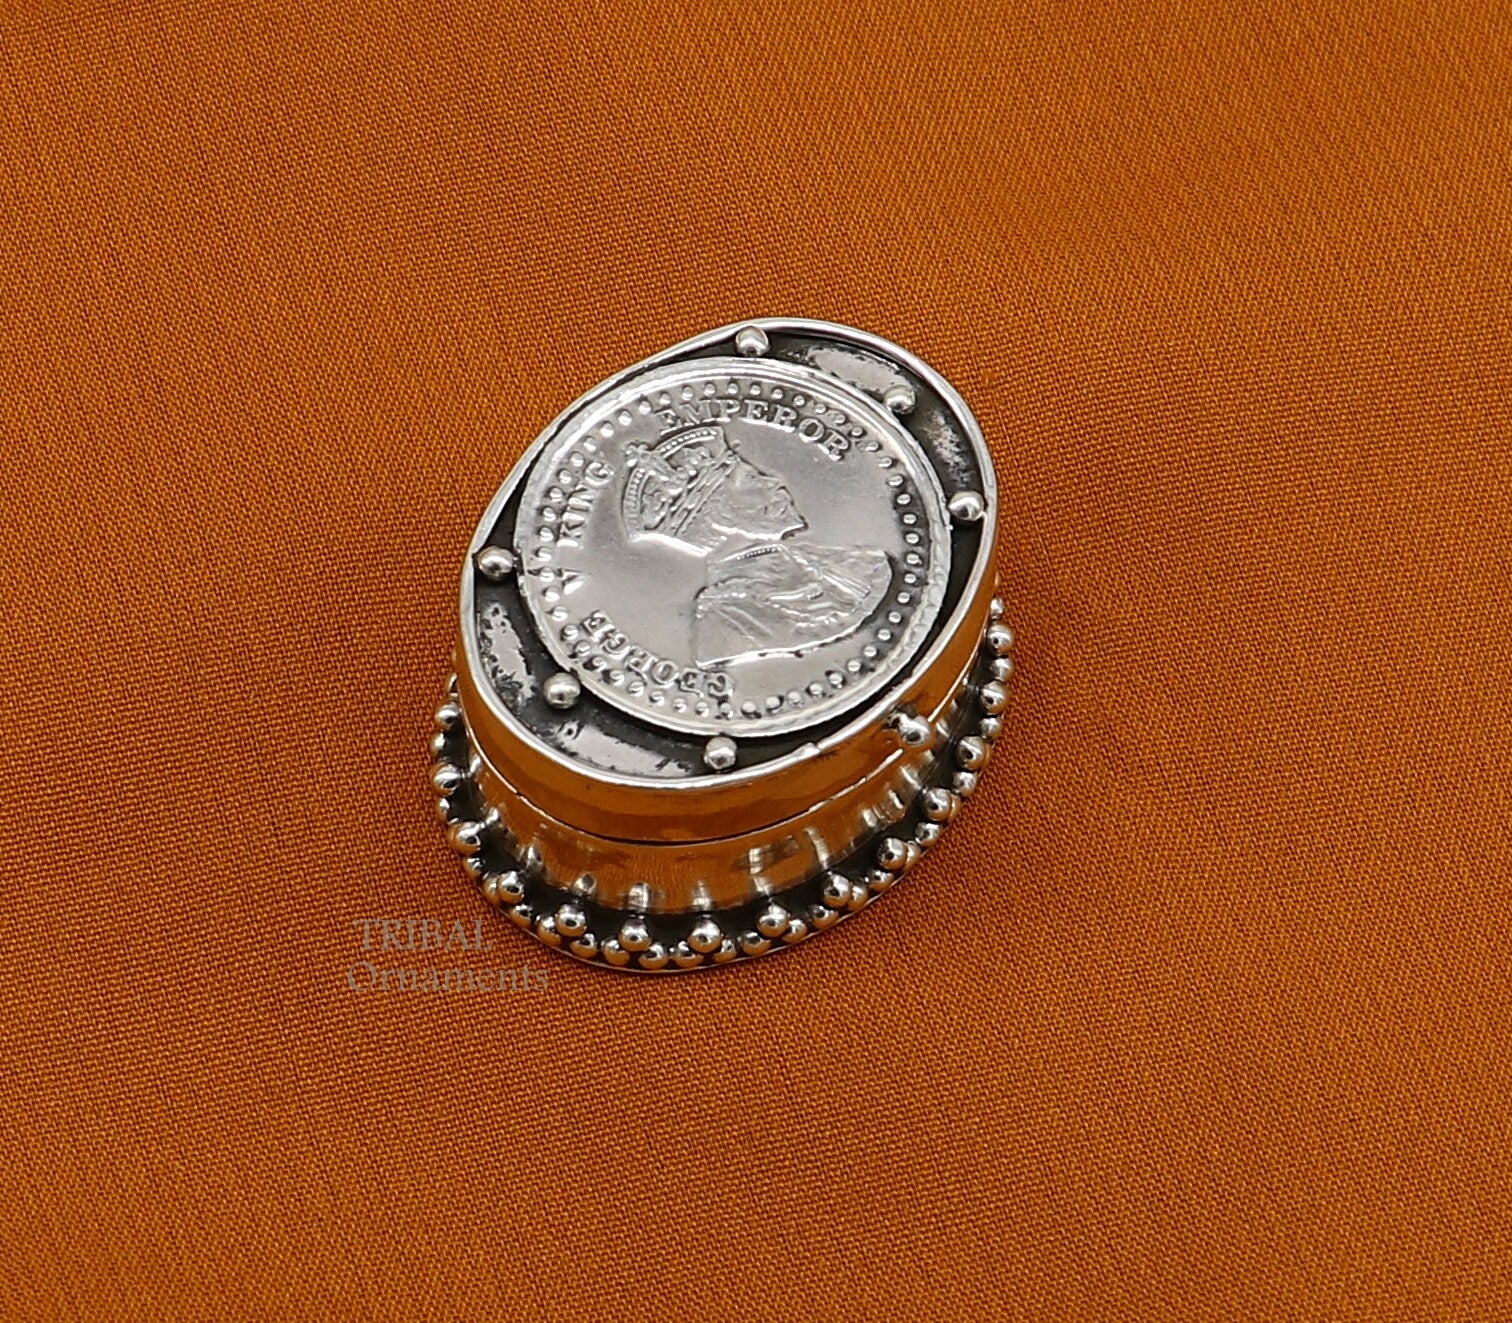 925 sterling silver Stunning George V king Emperor coin design trinket box, kajal eyeliner box, Sindur box brides gift silver box stb747 - TRIBAL ORNAMENTS